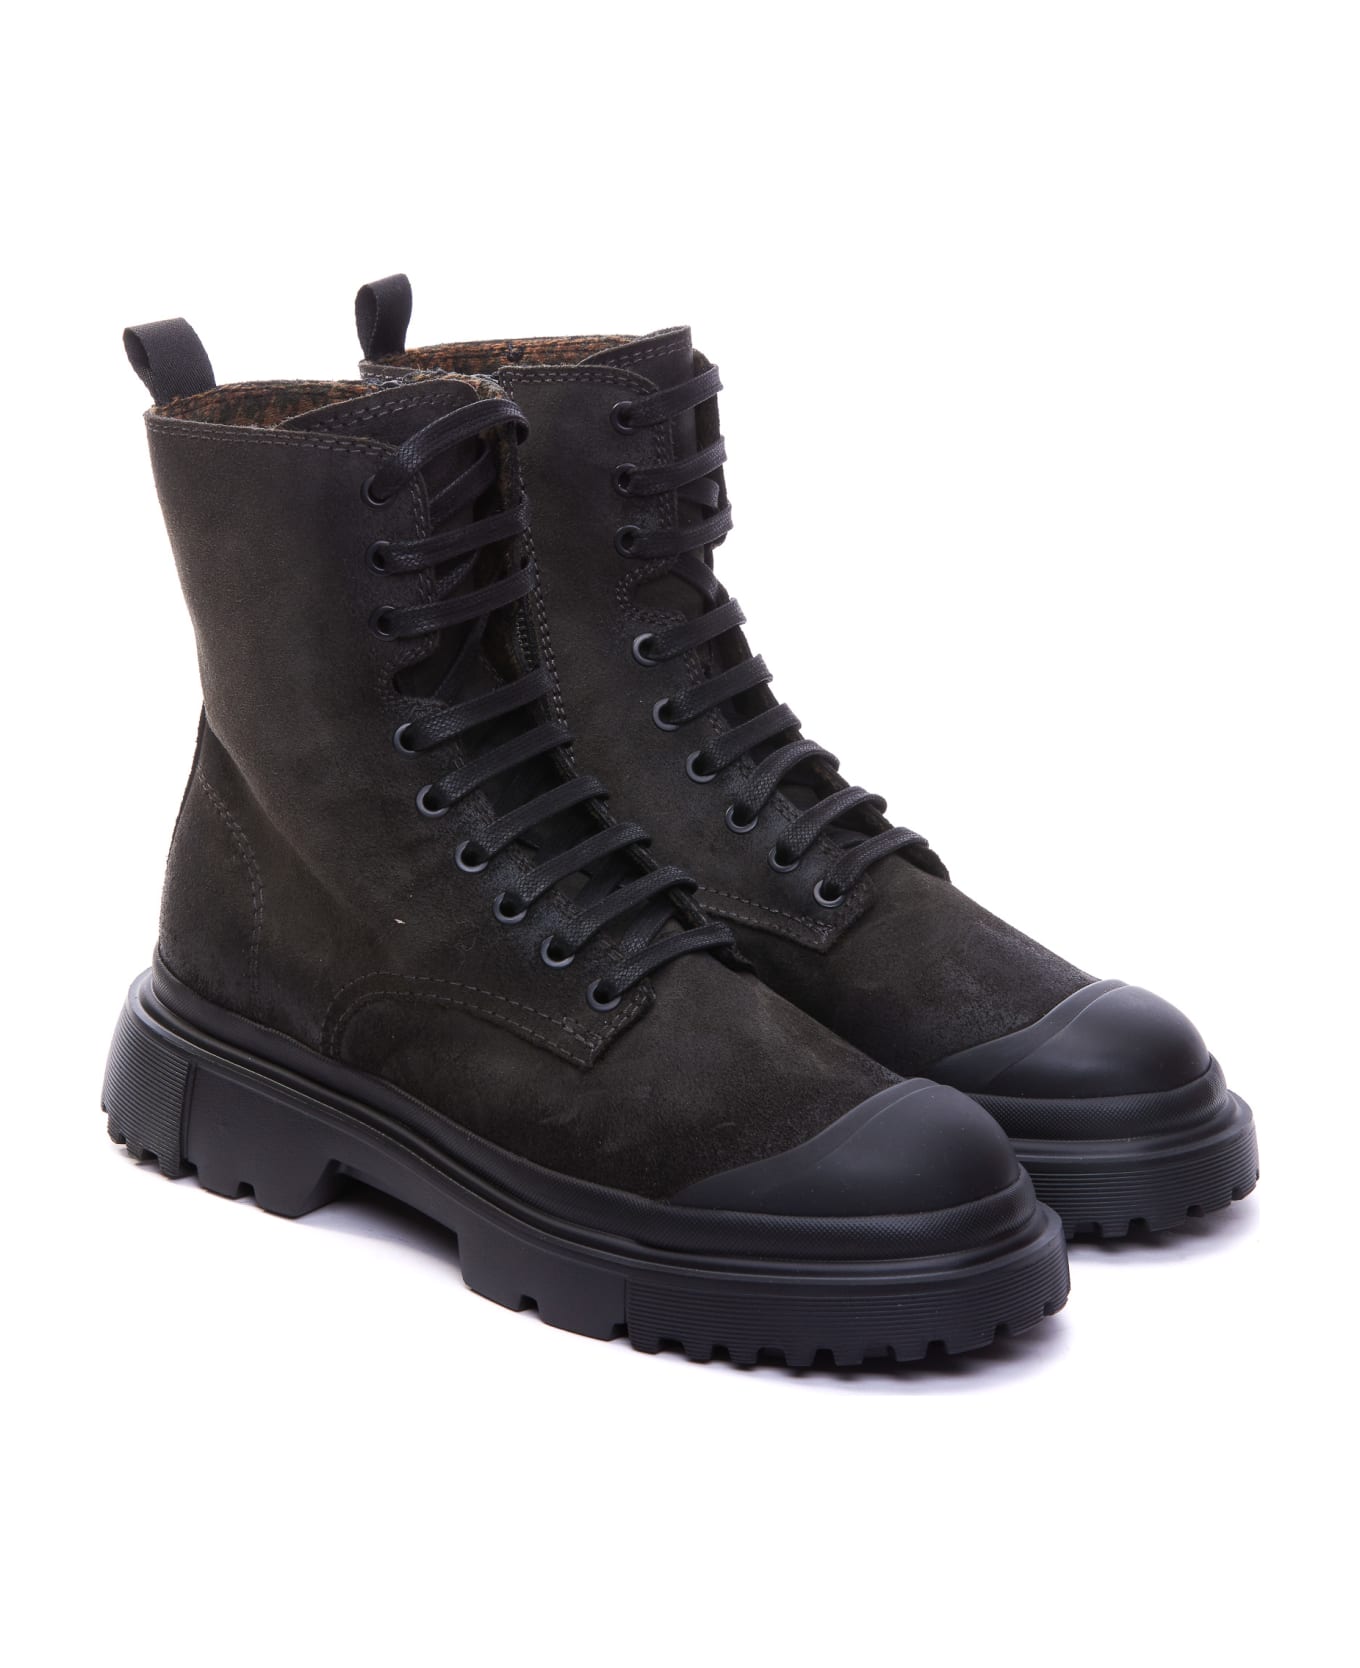 Hogan H619 Ankle Boots - Grey